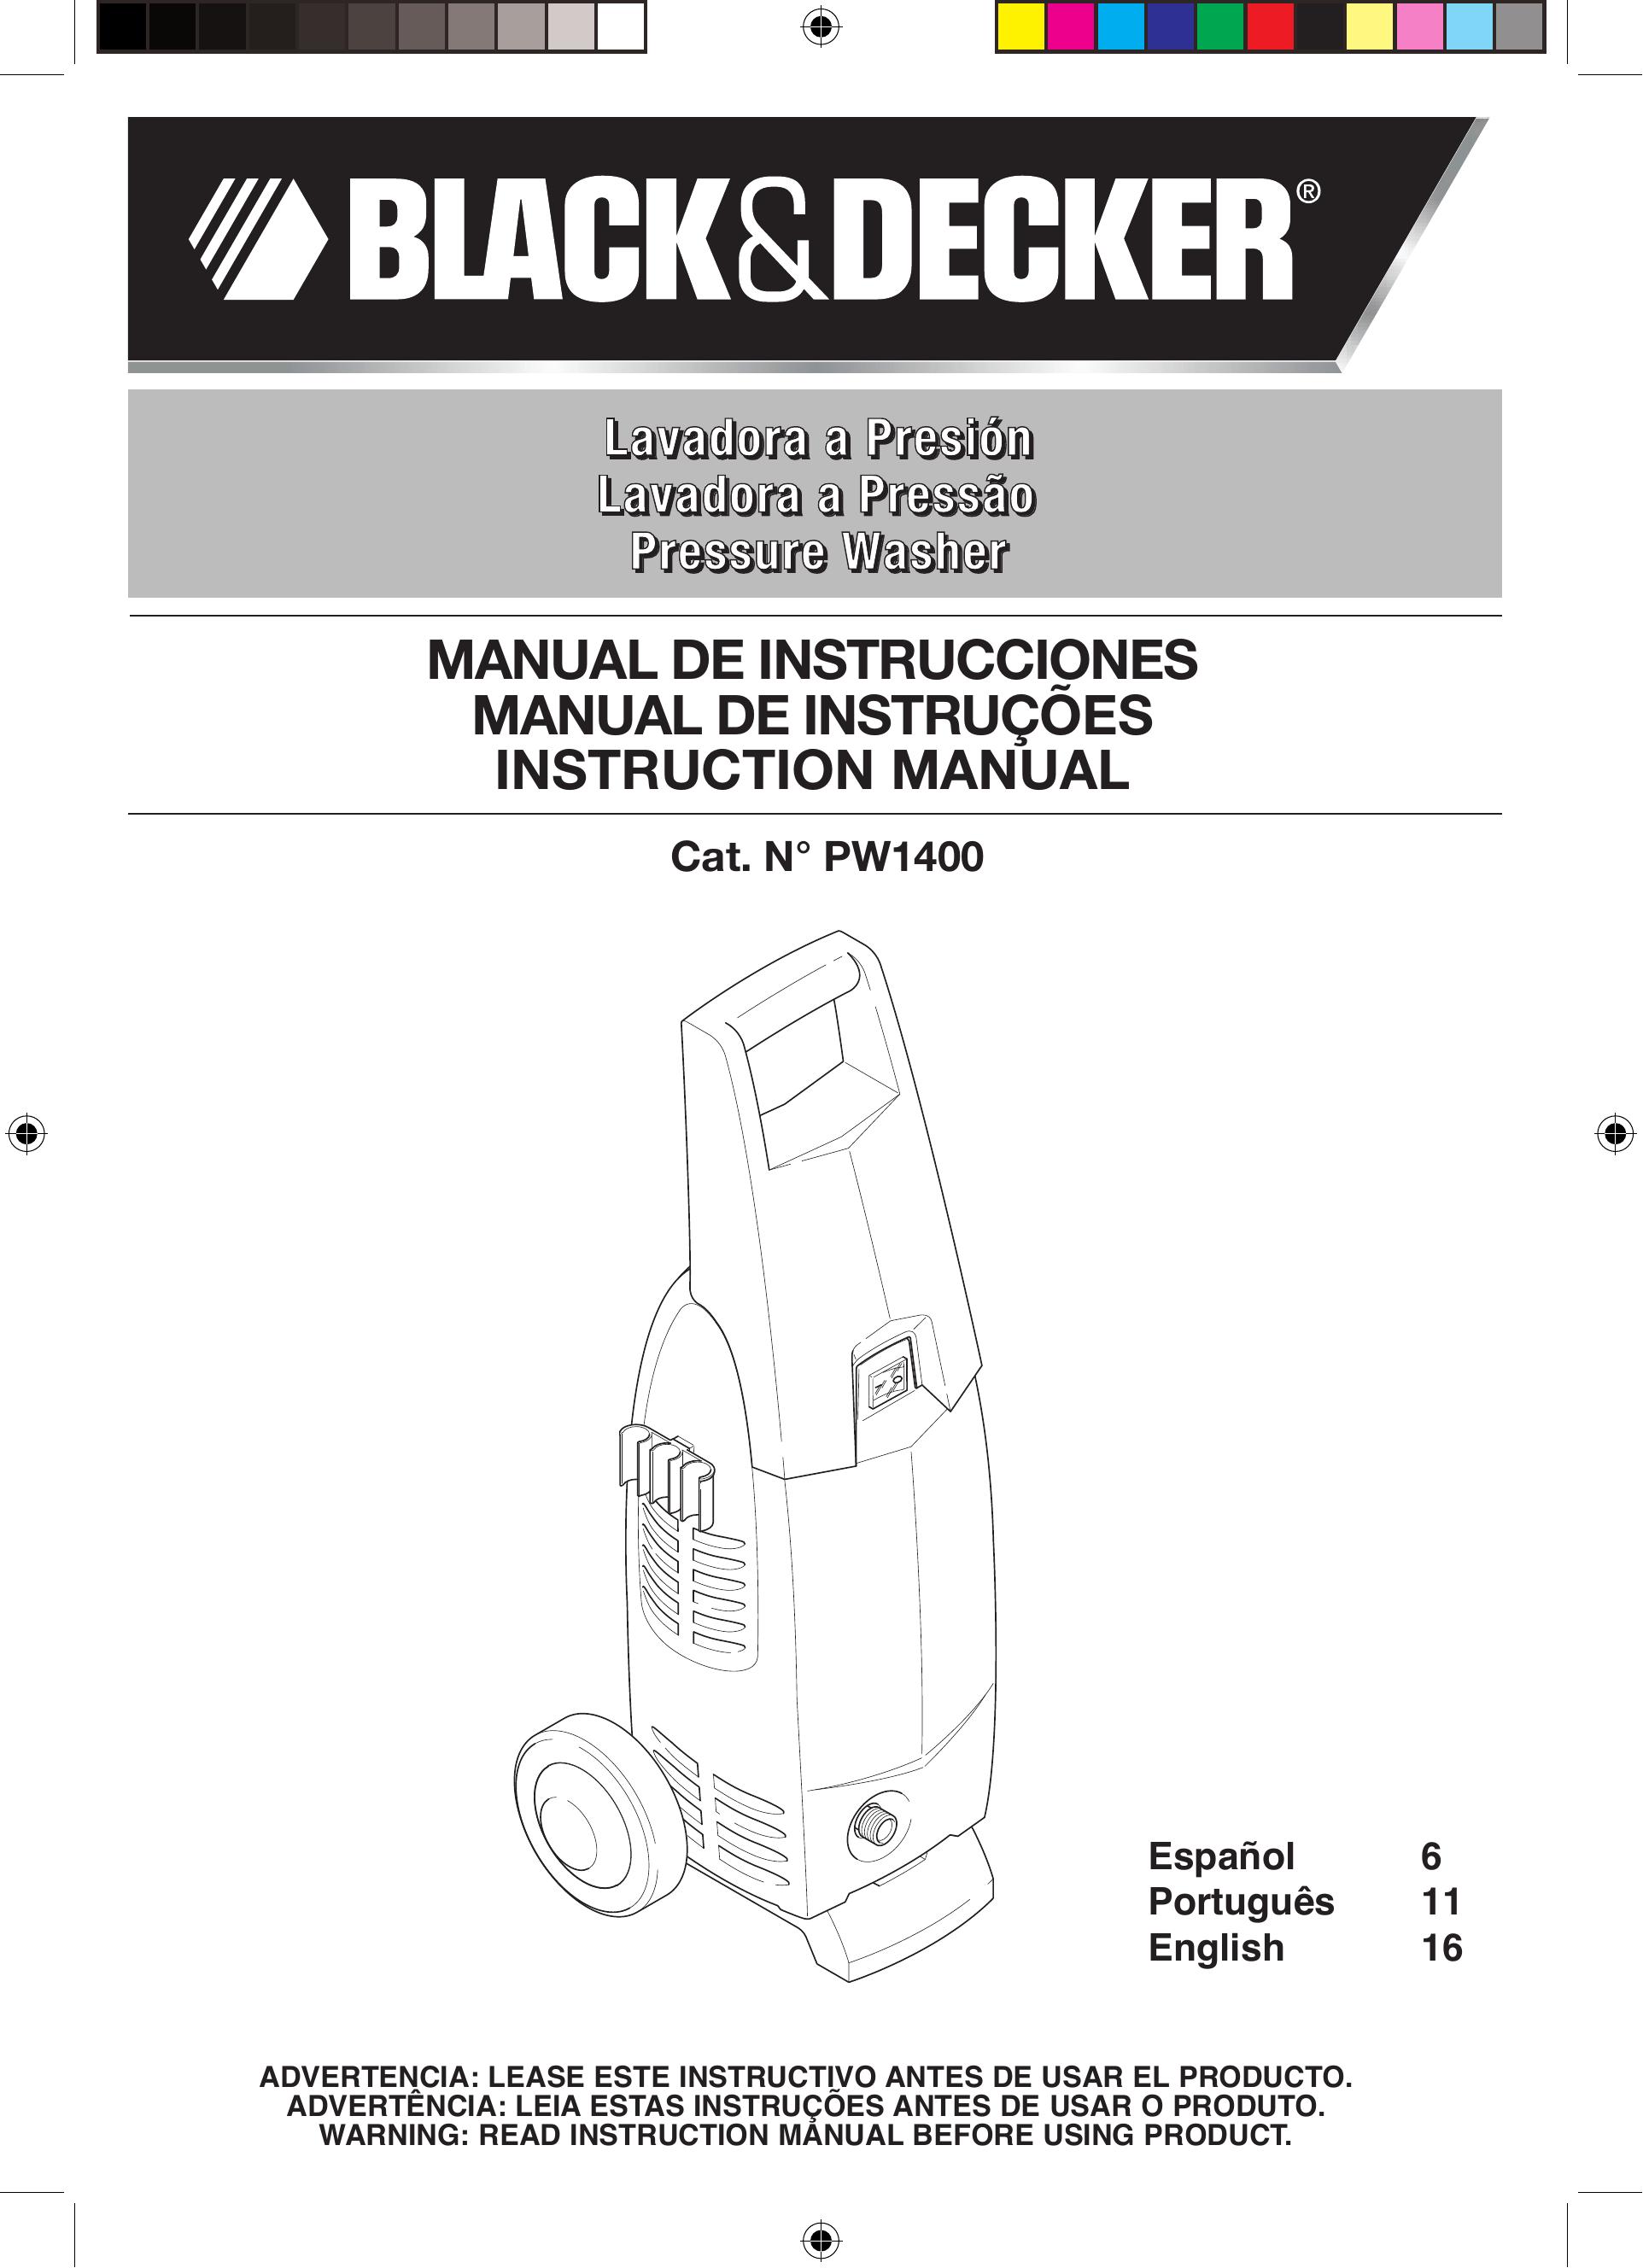 Black & Decker PW1400 Pressure Washer User Manual